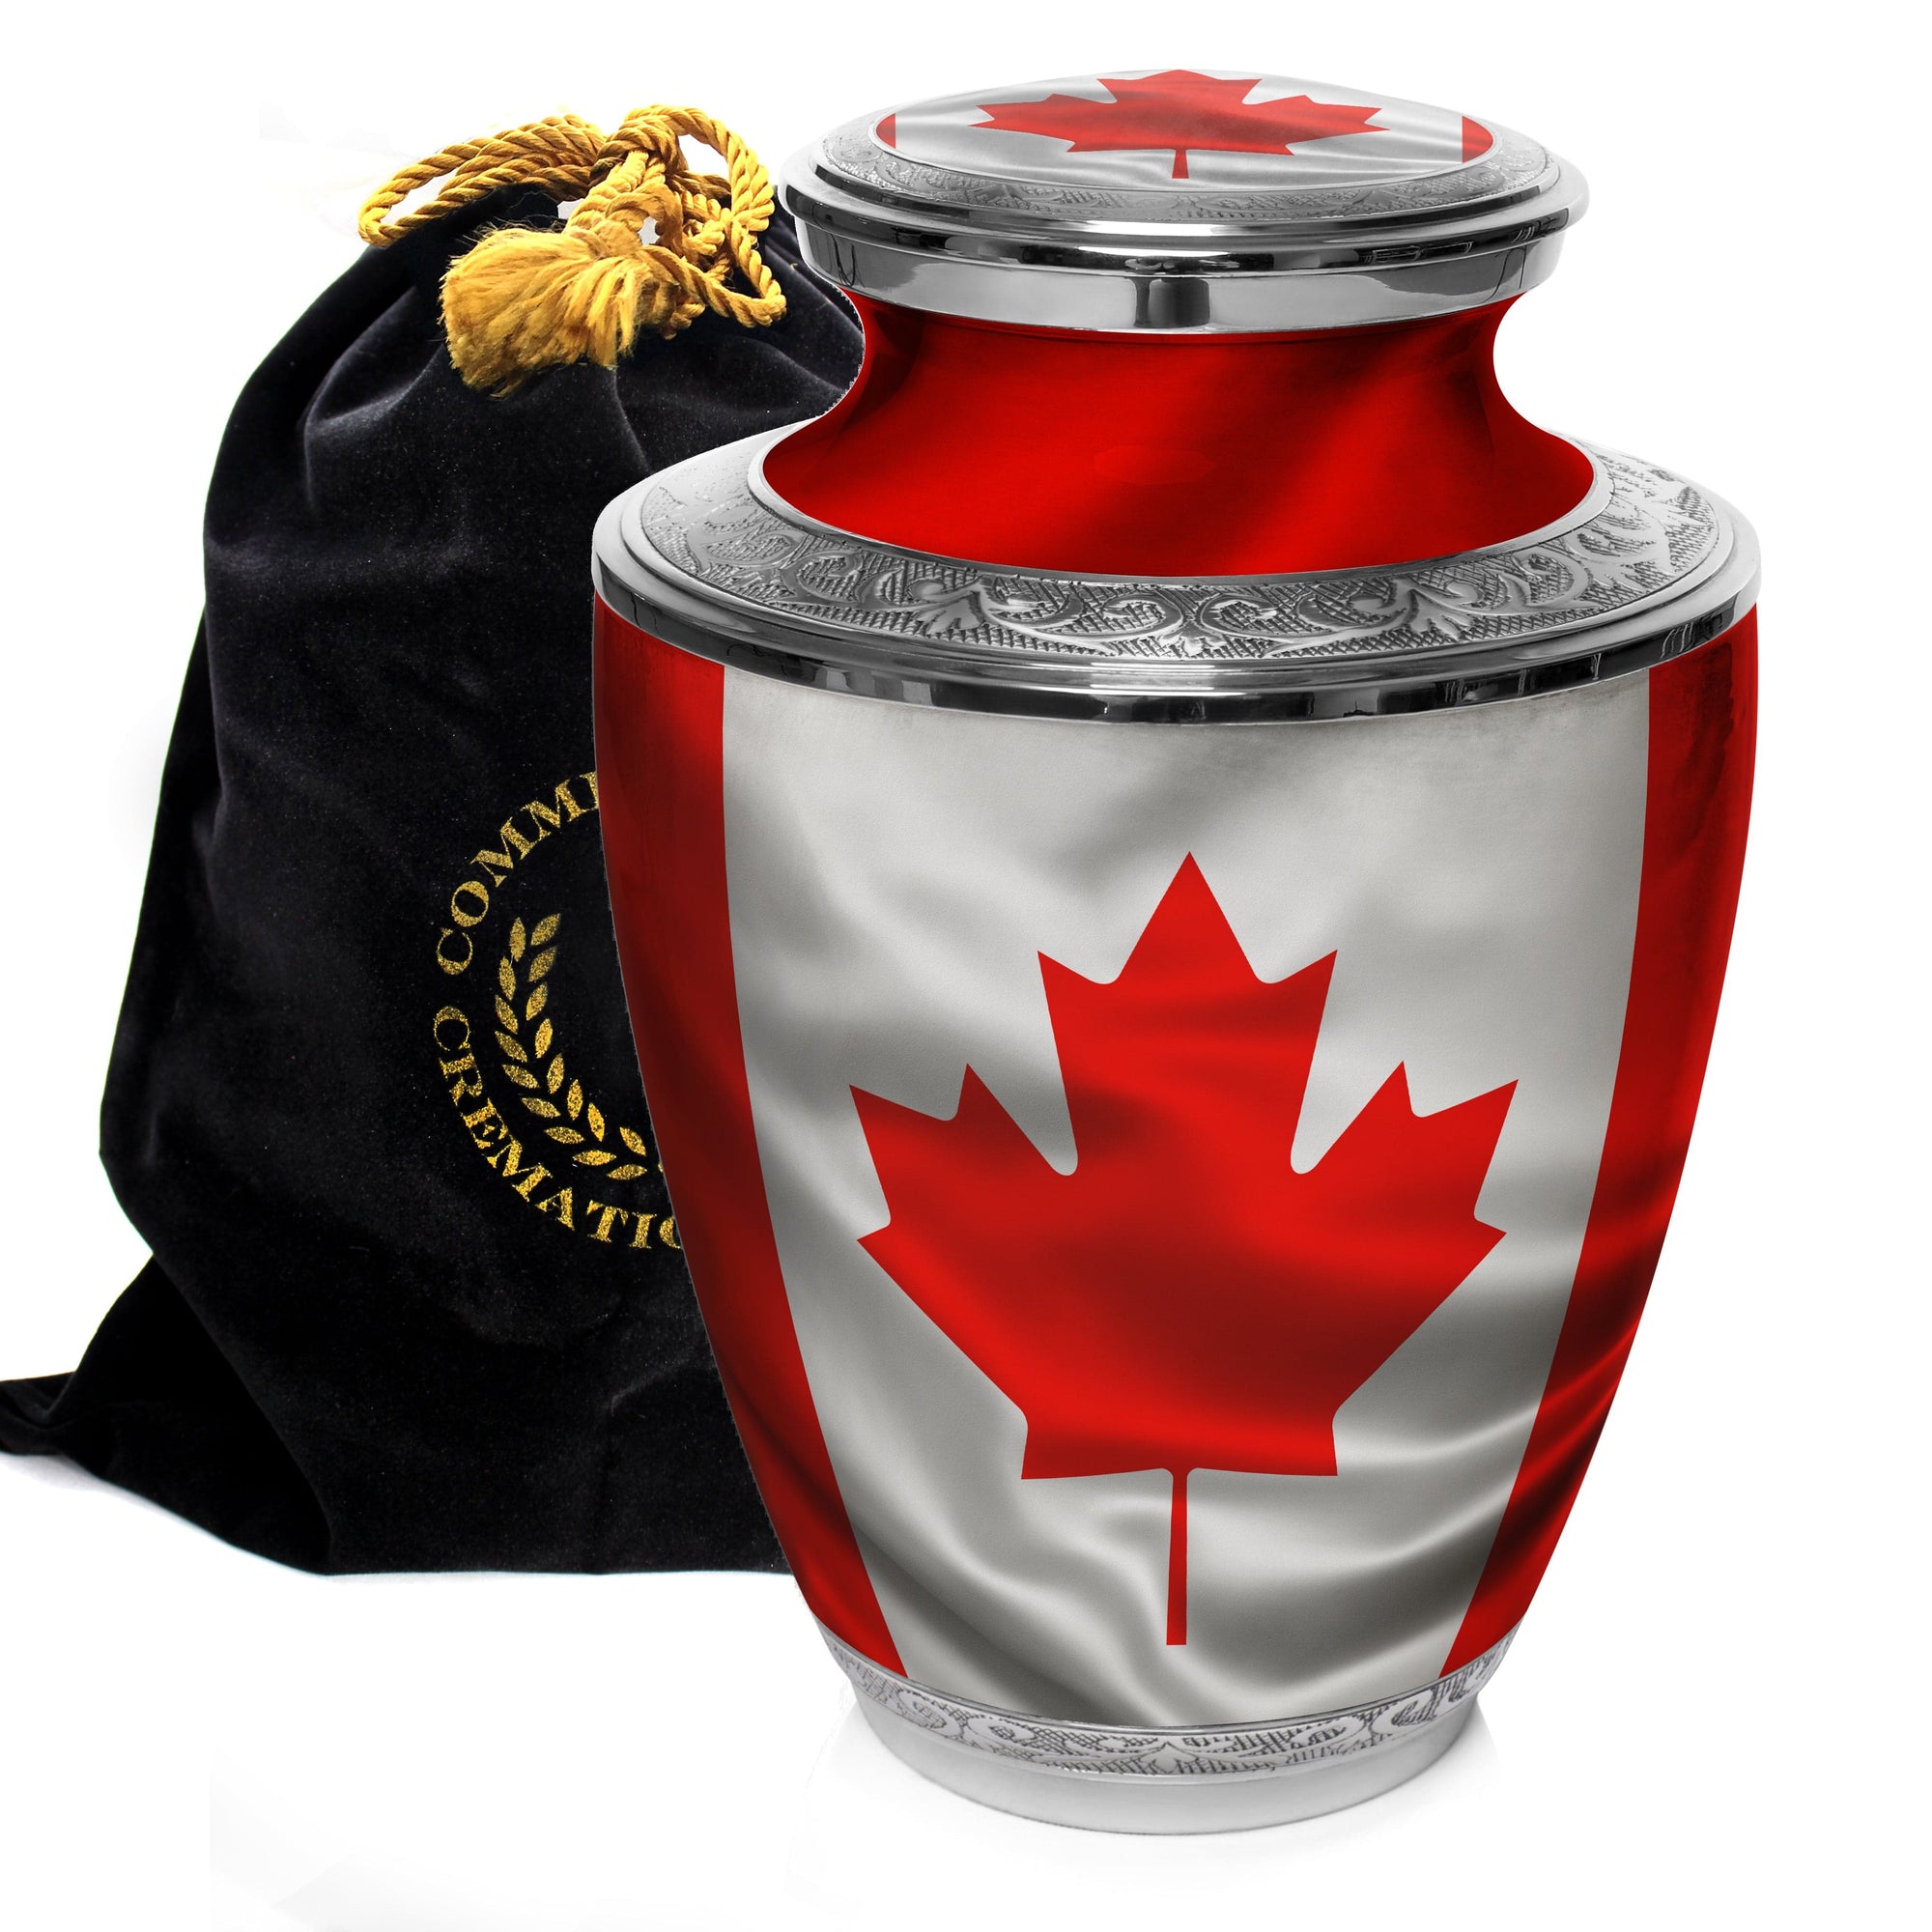 Commemorative Cremation Urns Home & Garden Canadian Flag Cremation Urn